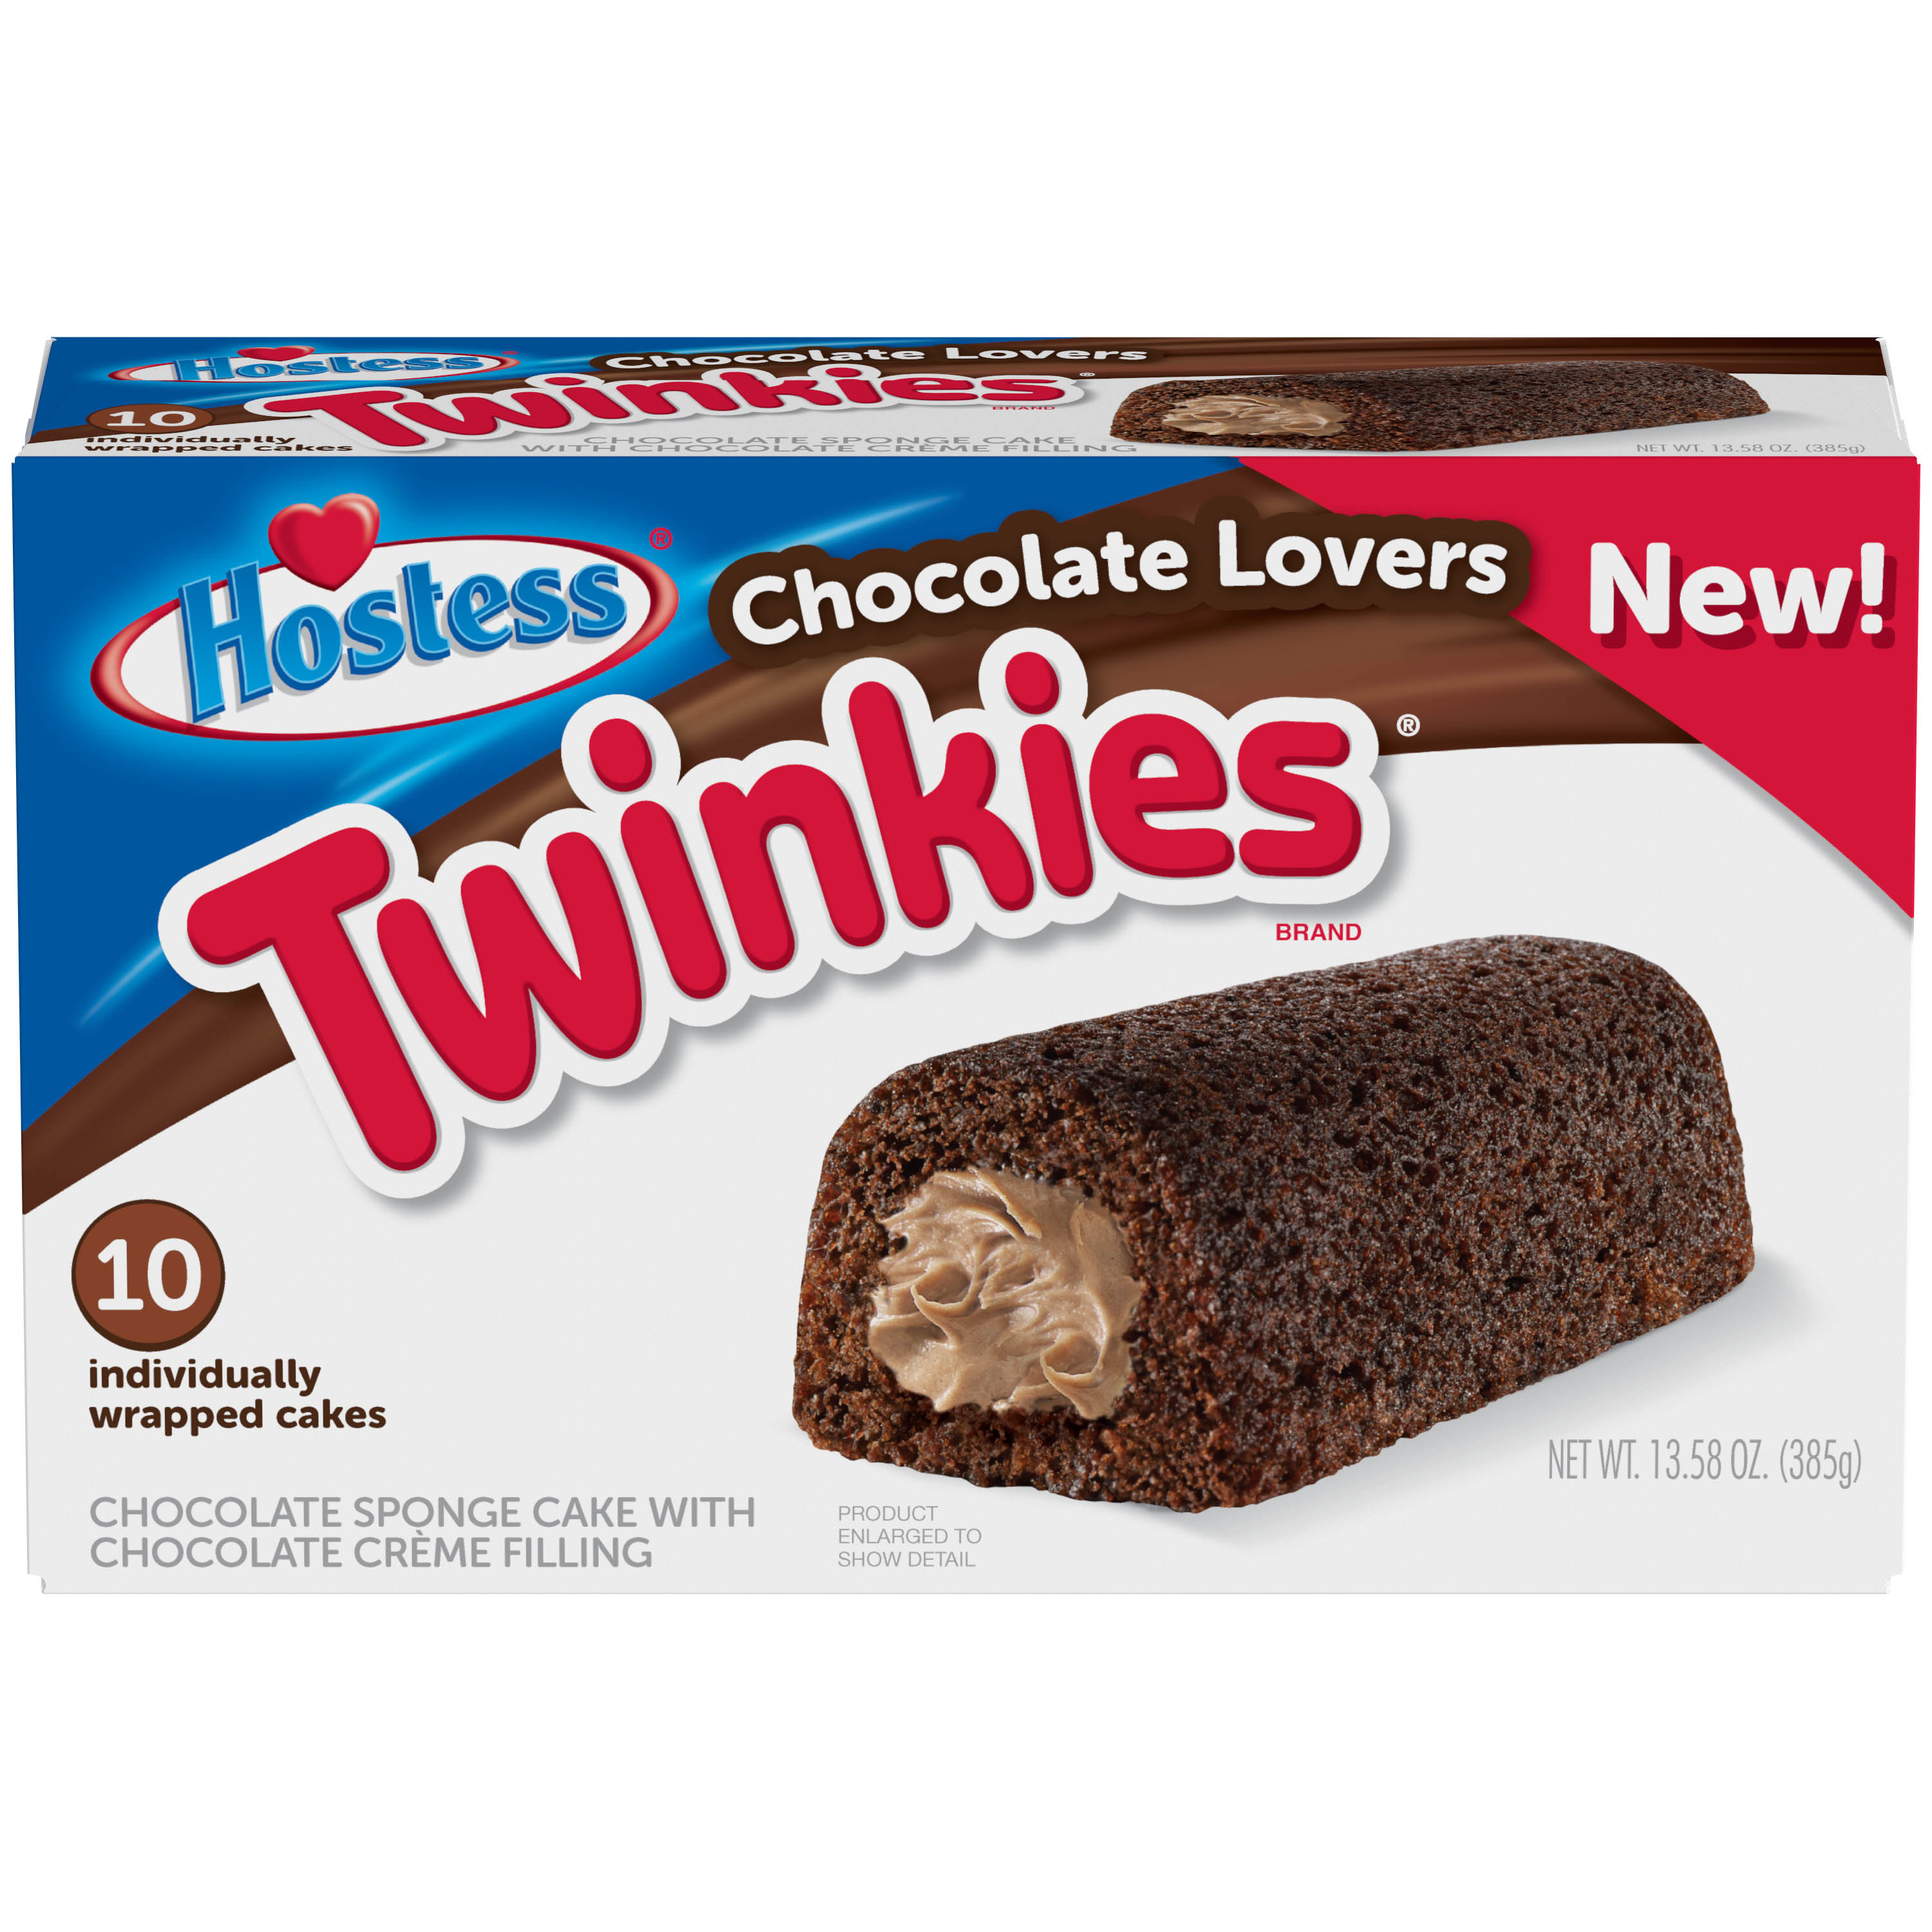 Hostess Chocolate Lovers Twinkie 13.58oz 10ct - image 2 of 11